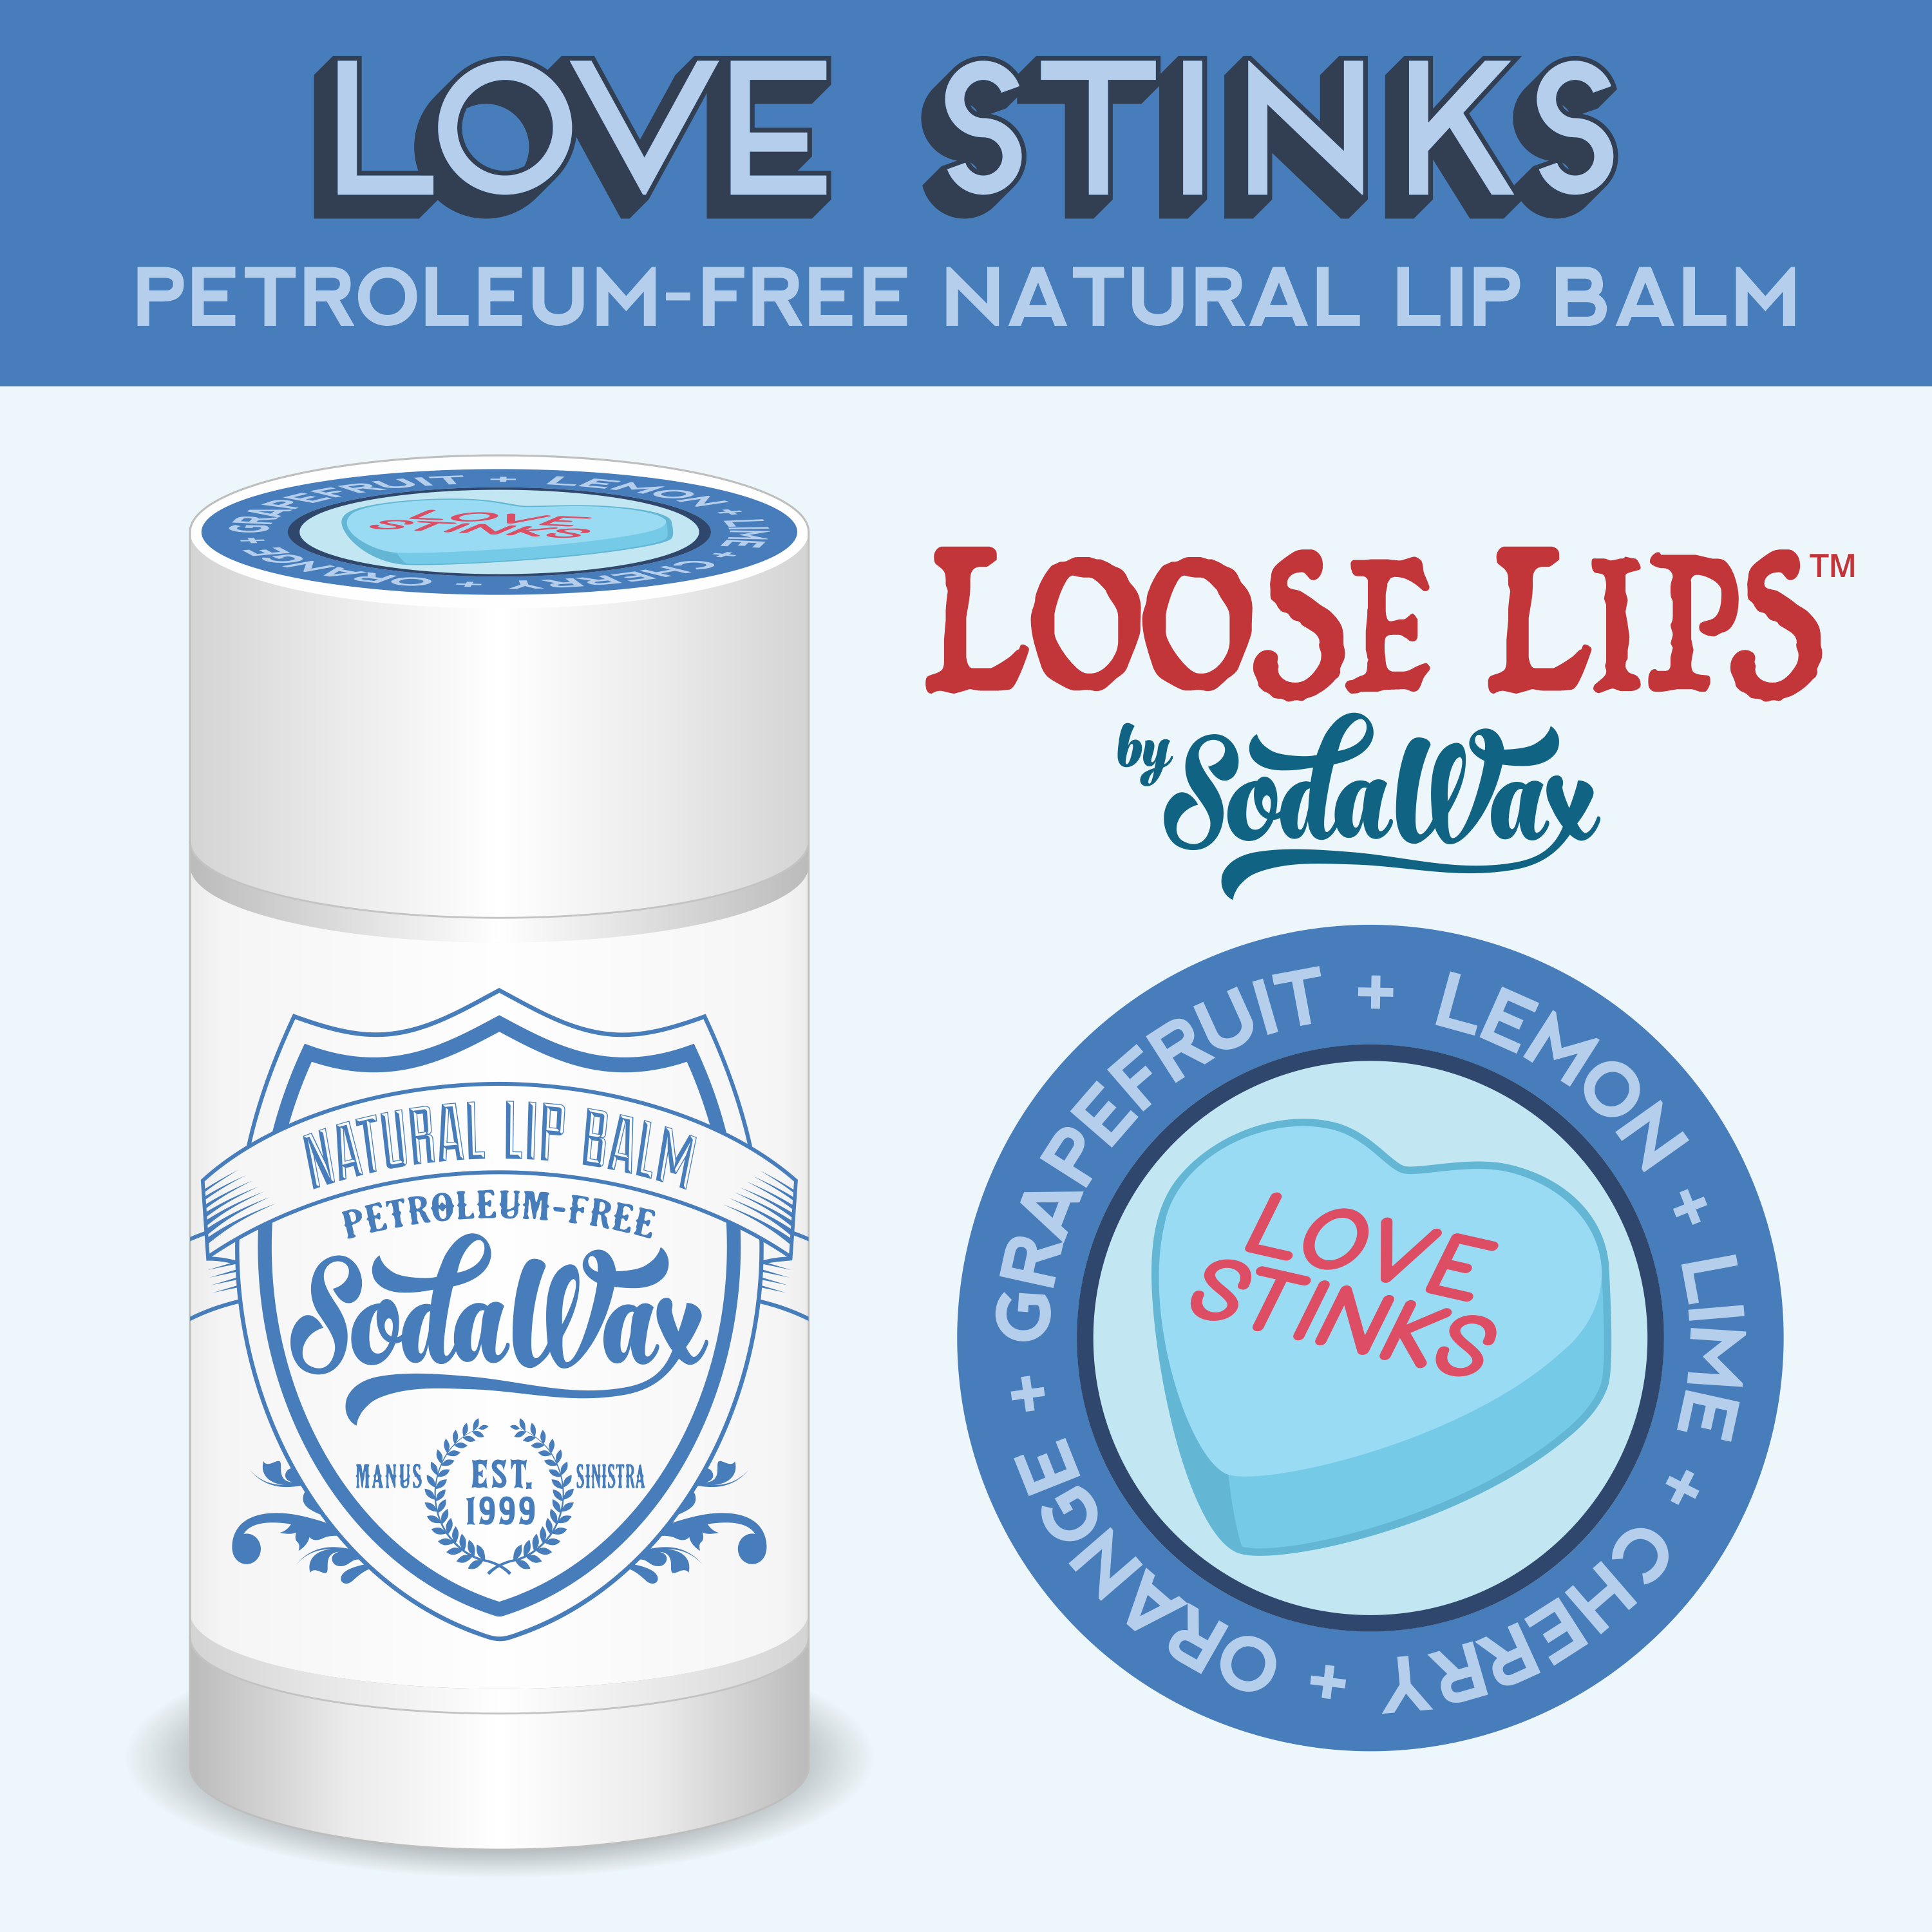 “Love Stinks” Loose Lips™ Titanic Size Natural Lip Balm